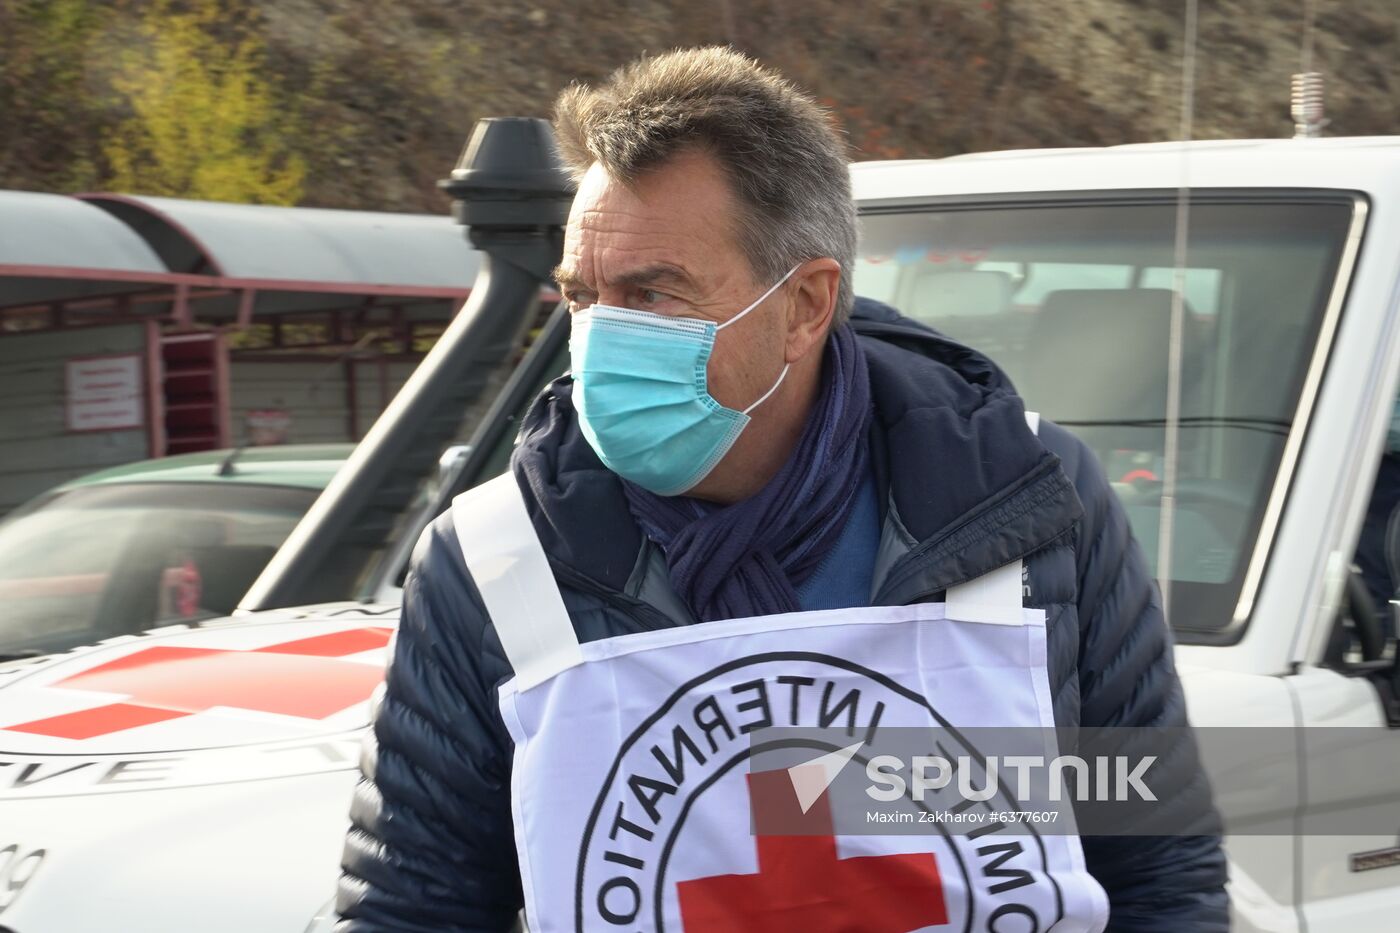 Ukraine DPR LPR Red Cross